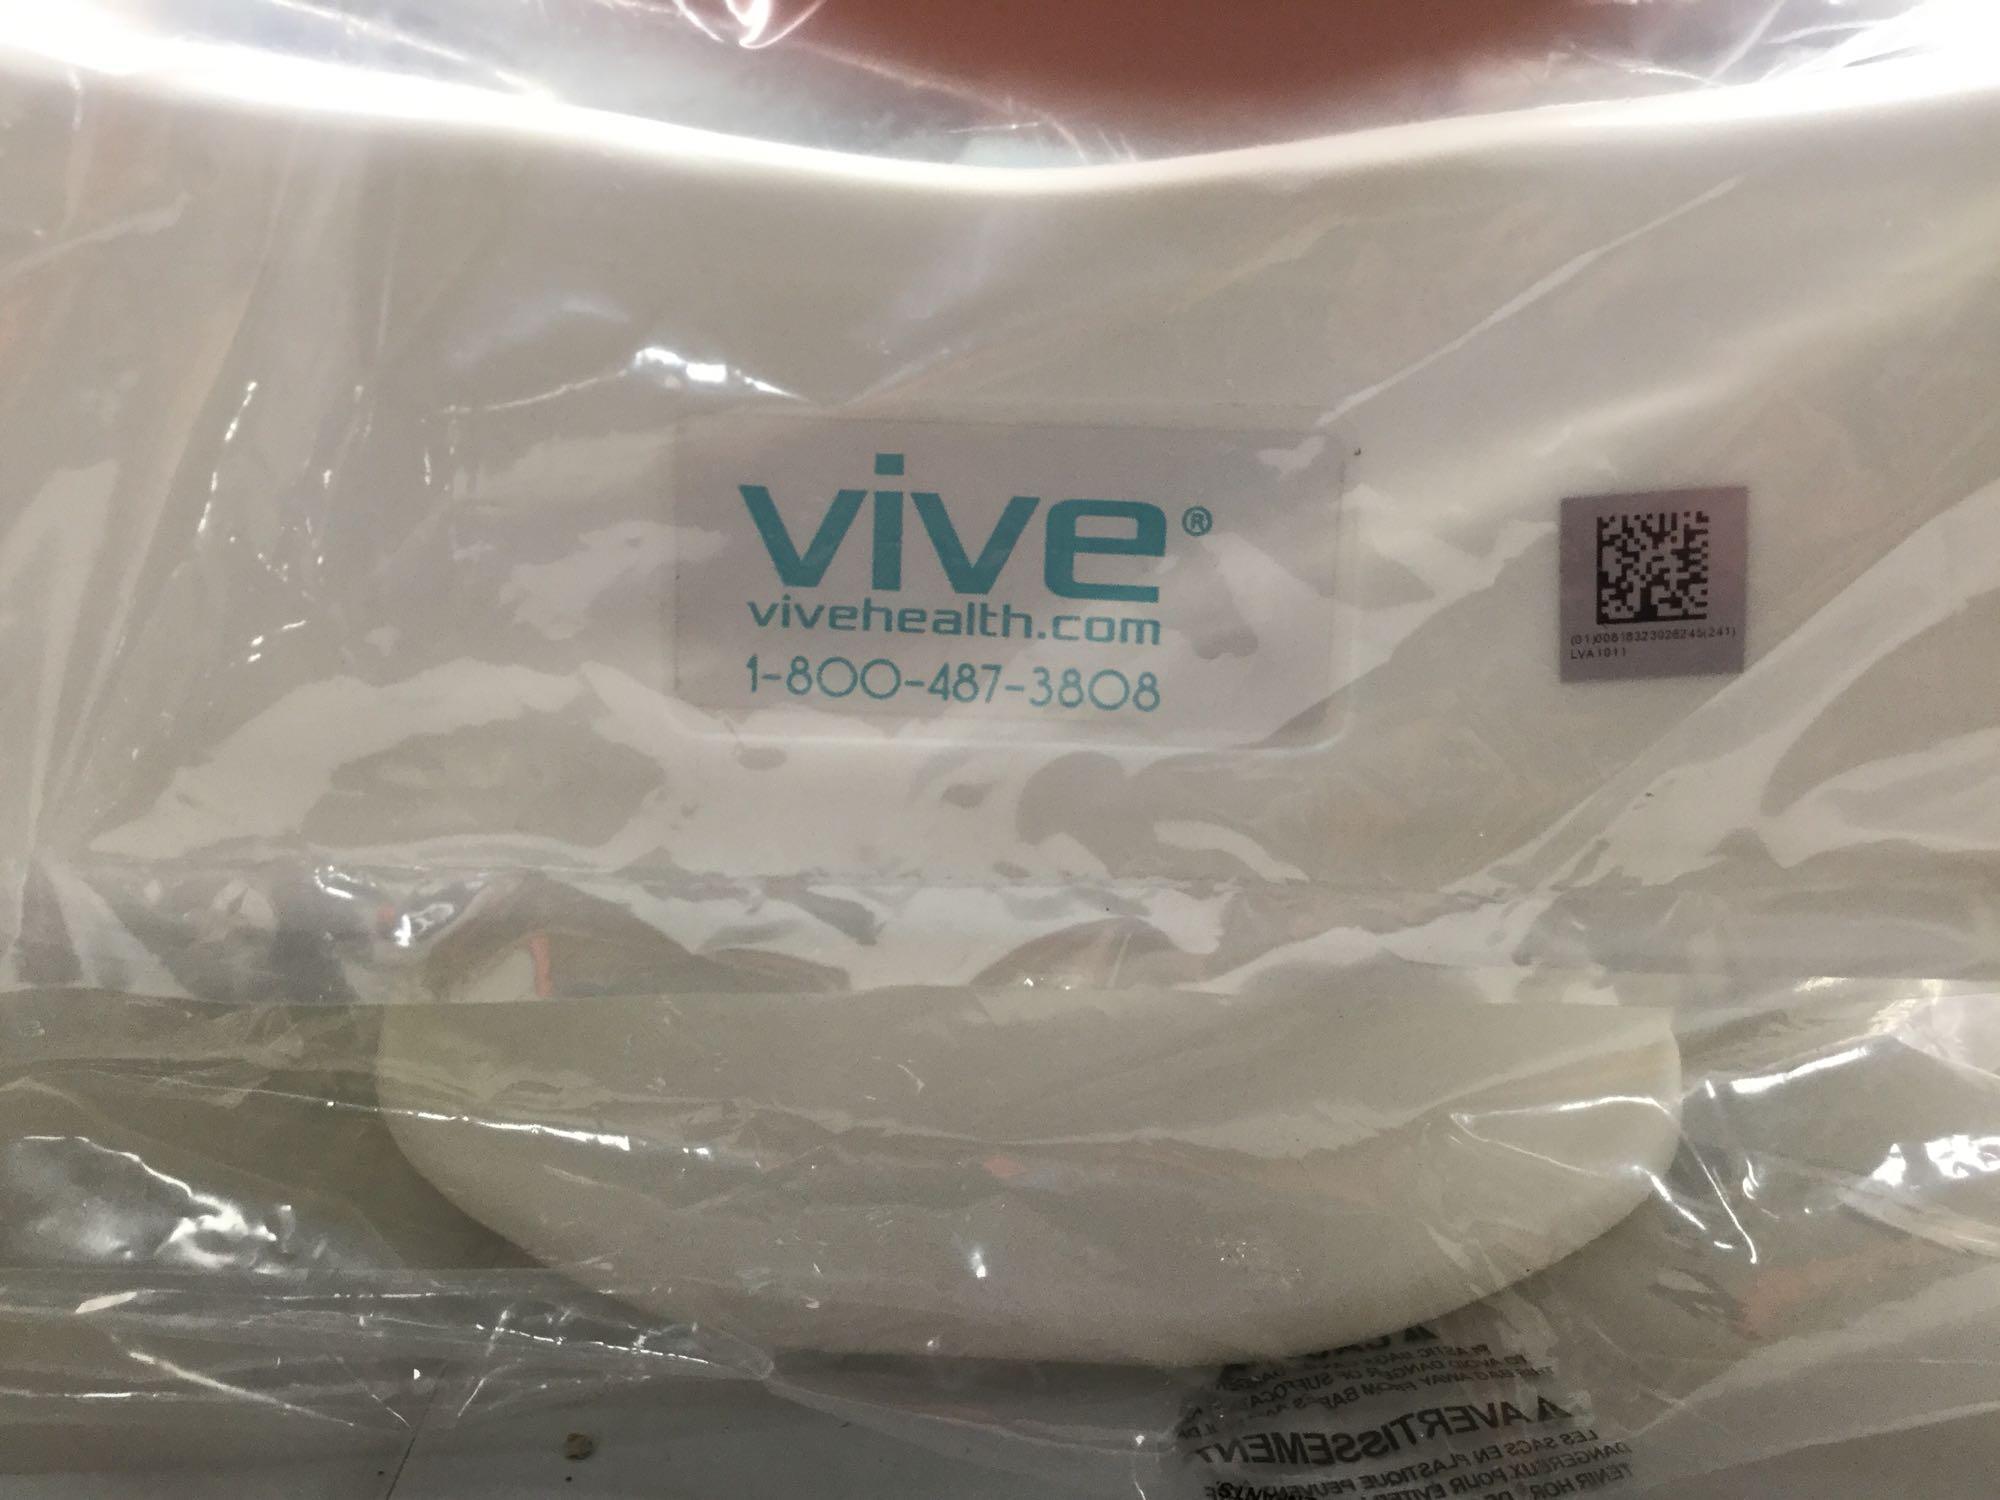 Vive LVA1011 Raised Toilet Seat with Padded Handles $59.95 MSRP